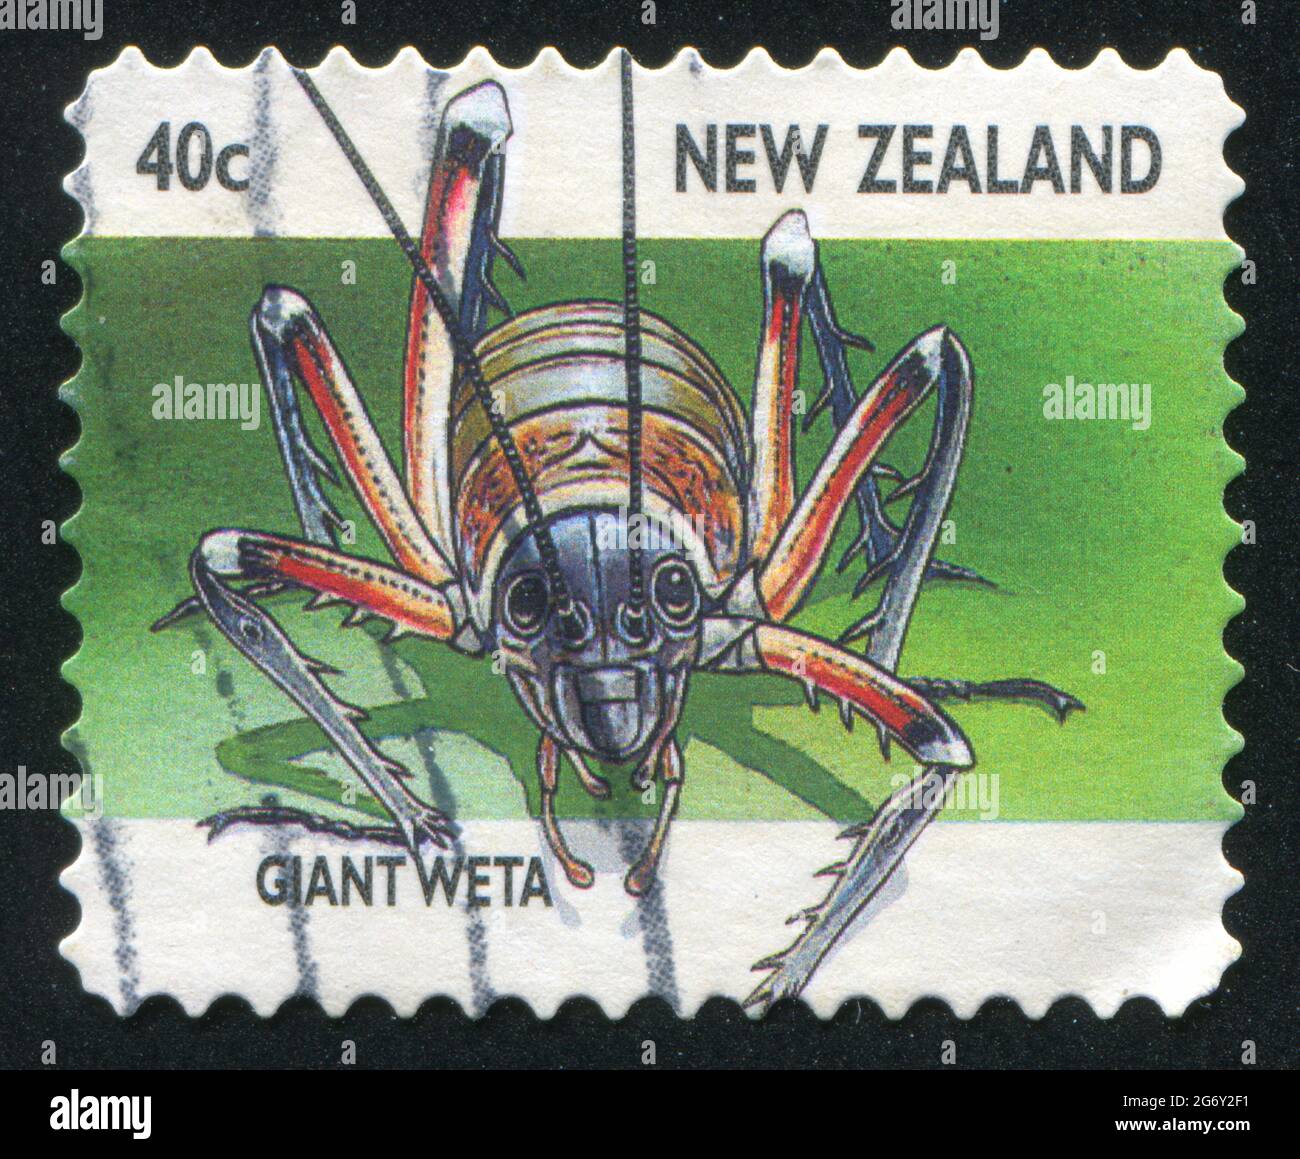 NEW ZEALAND - CIRCA 1997: stamp printed by New Zealand, shows Creepy Crawlies, Giant weta, circa 1997 Stock Photo